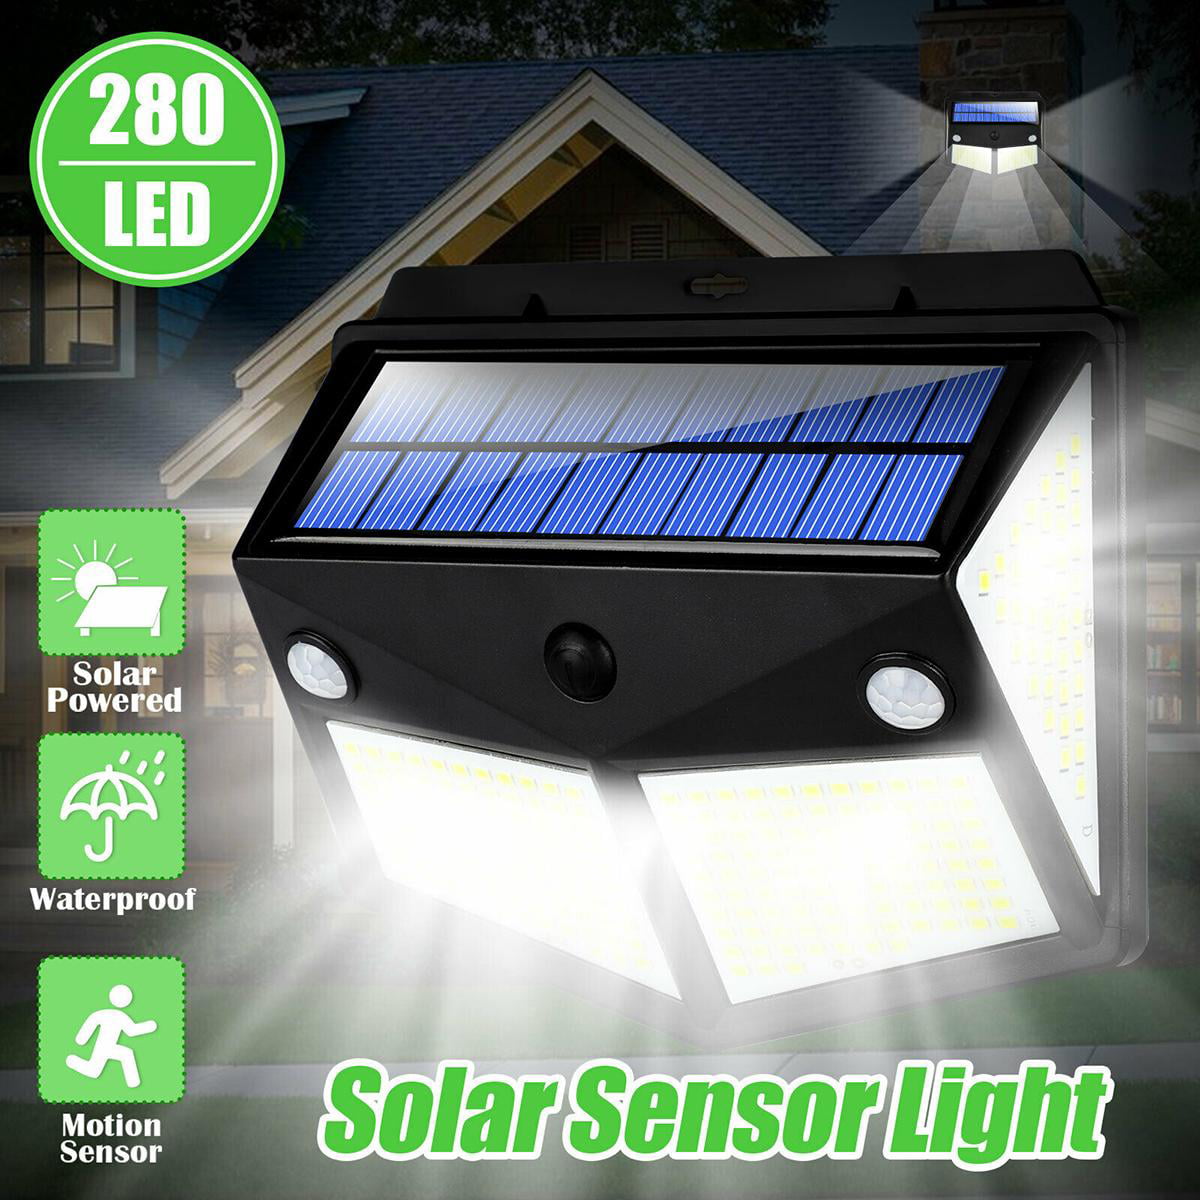 LED Solar Power Lamp Waterproof PIR Motion Sensor Outdoor Garden Yard Wall Light 